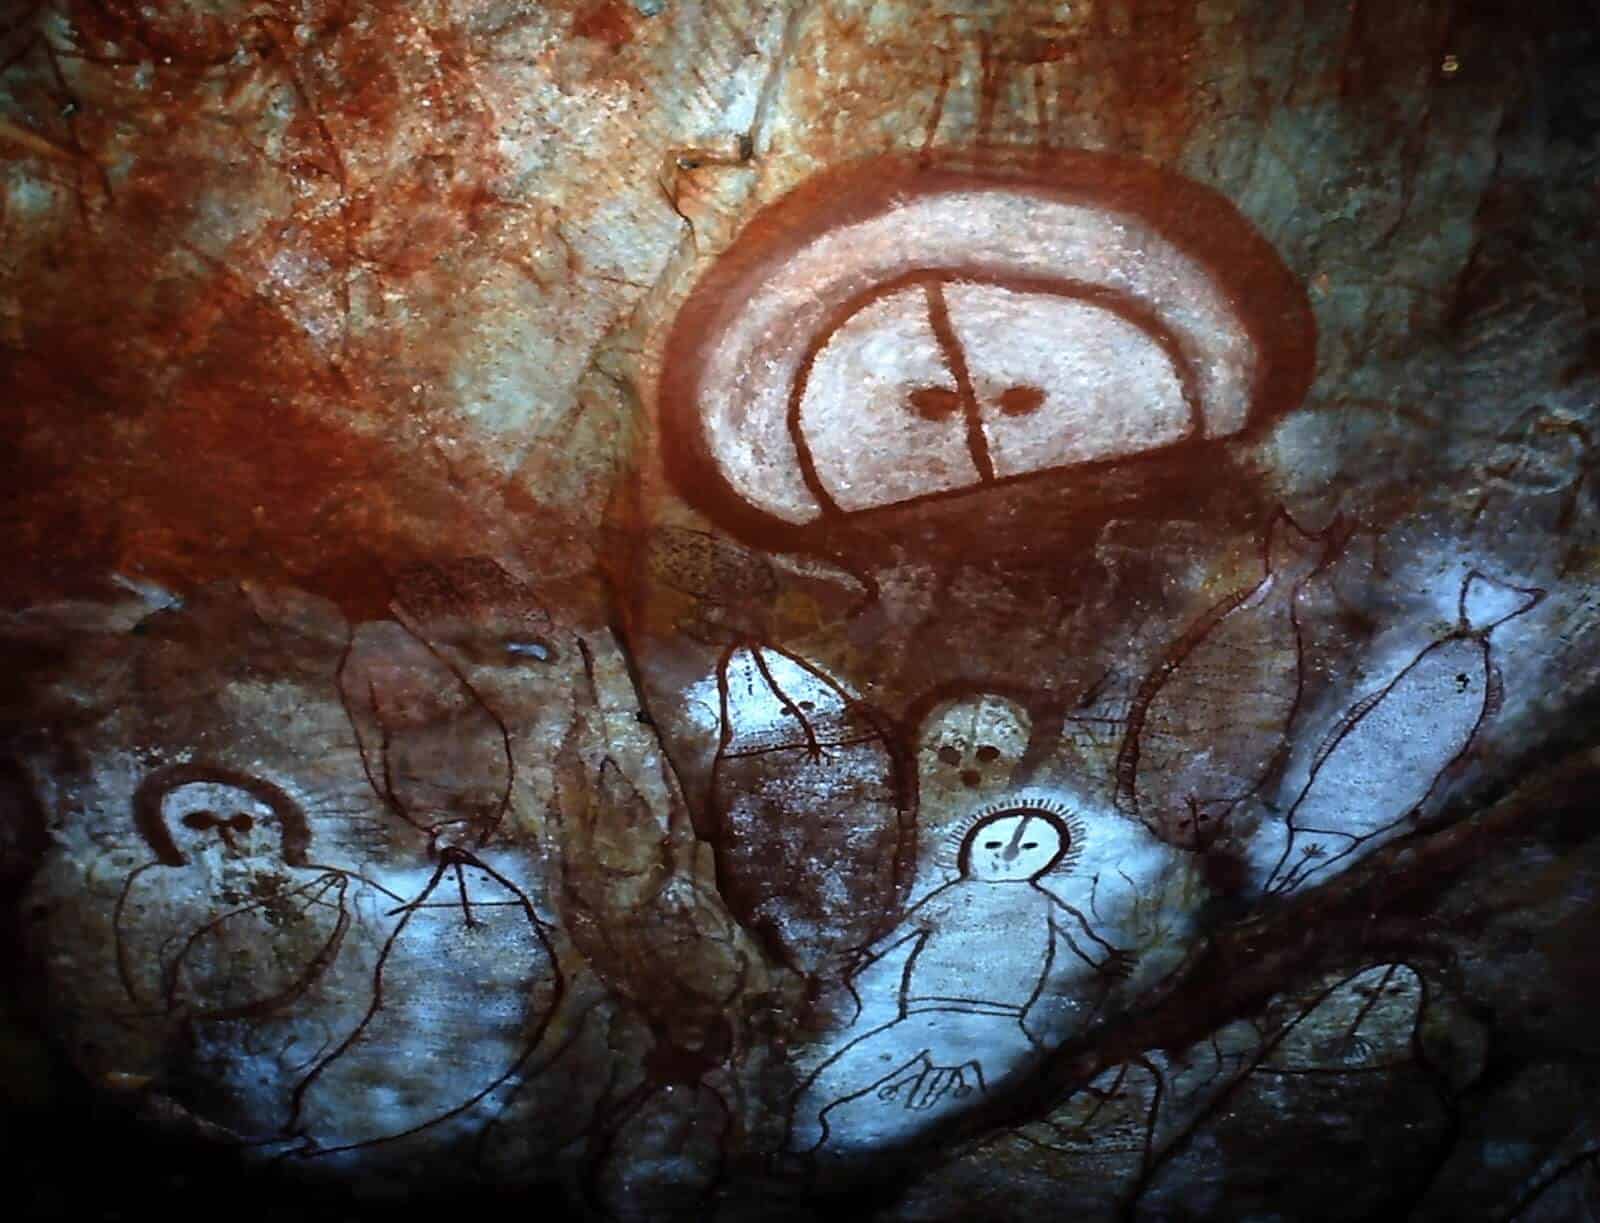 WANDJINAS - The Wandjina cave paintings: Depictions of sky-beings?